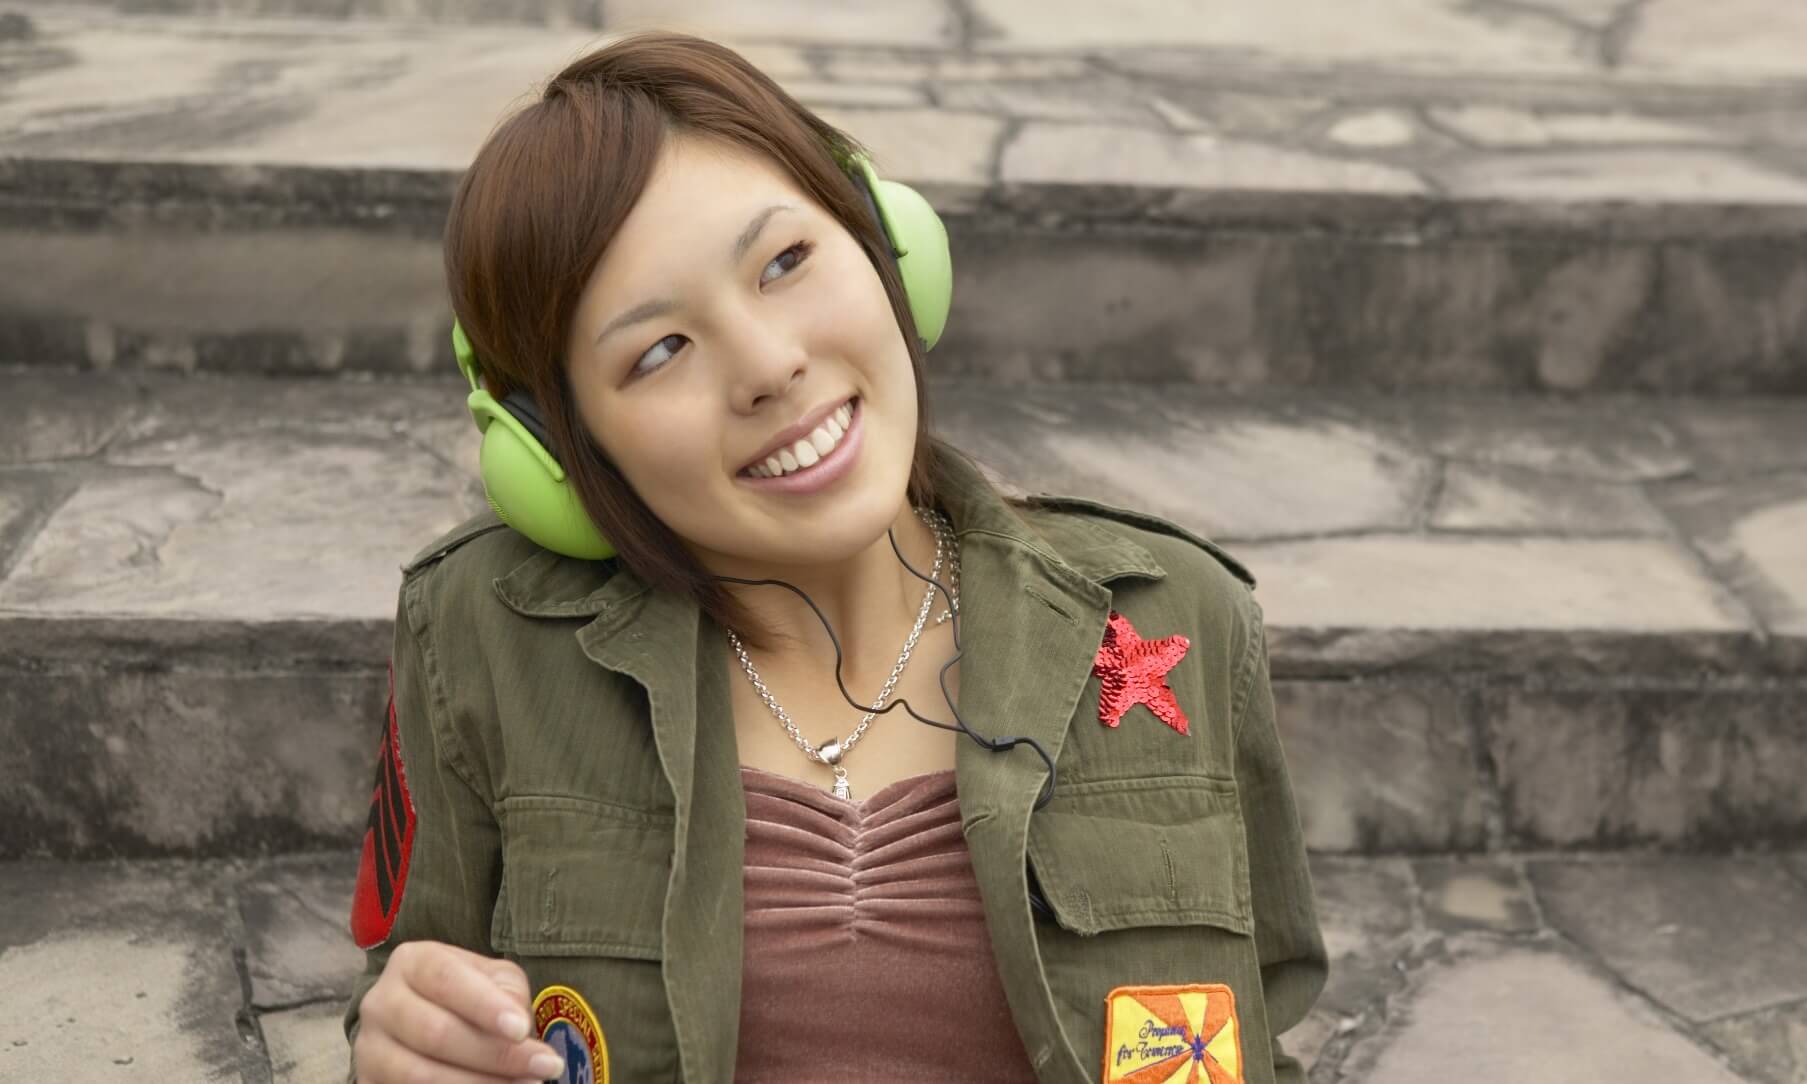 Teenage girl sitting outside on steps listening to headphones